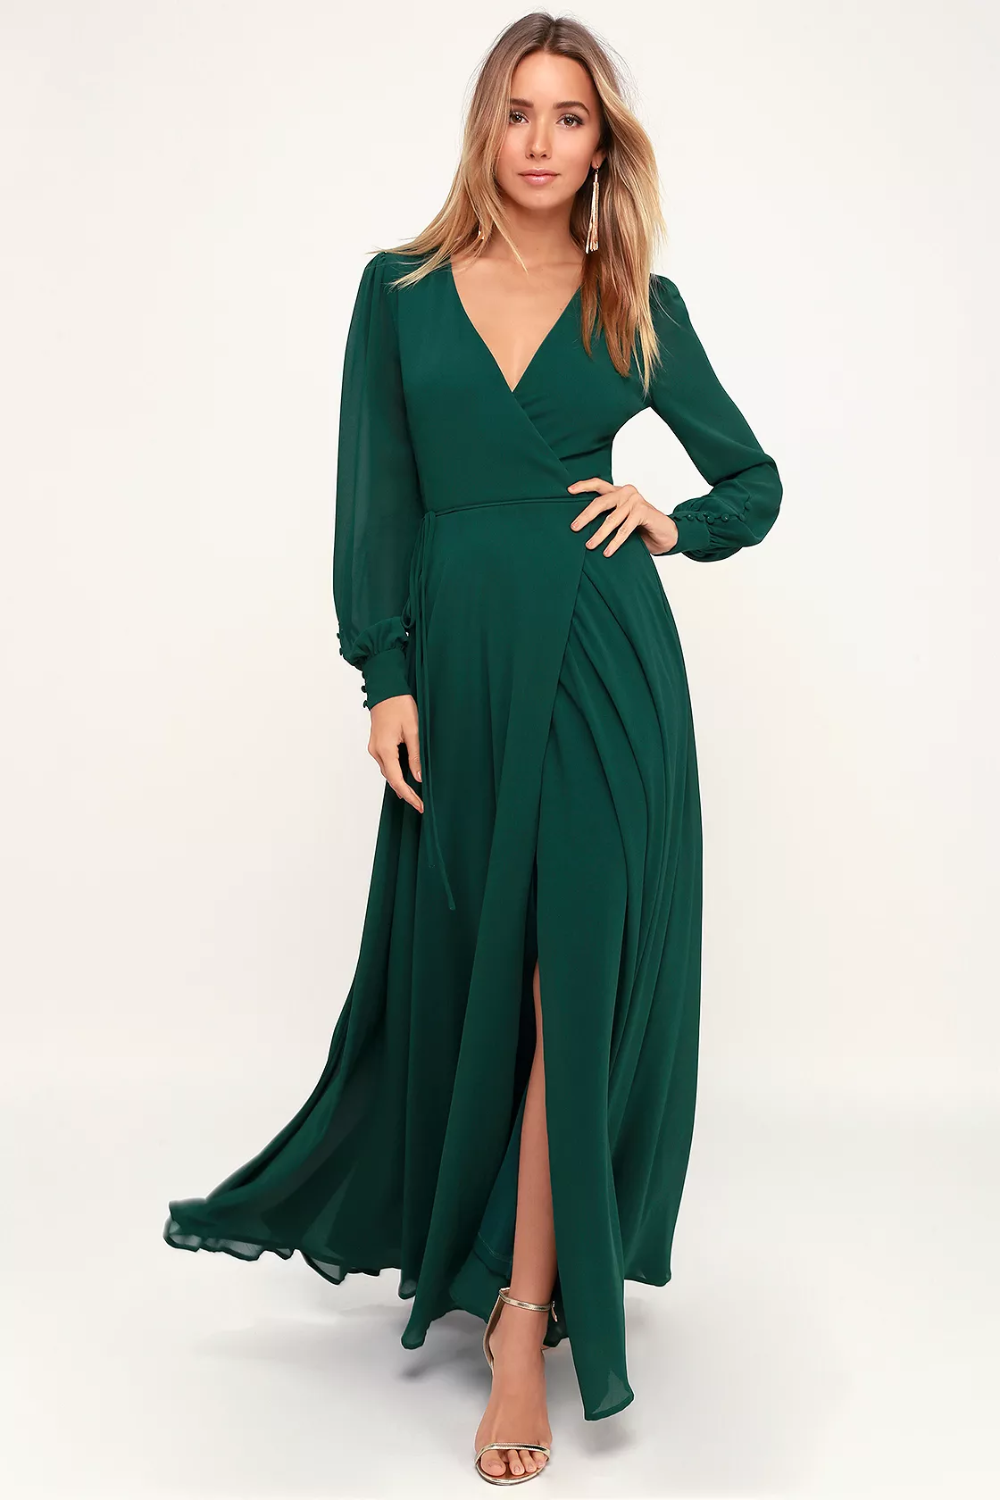 dark green dress. 60+ Most Fashionable Semi Formal Wedding Dresses for Female Guests - 10